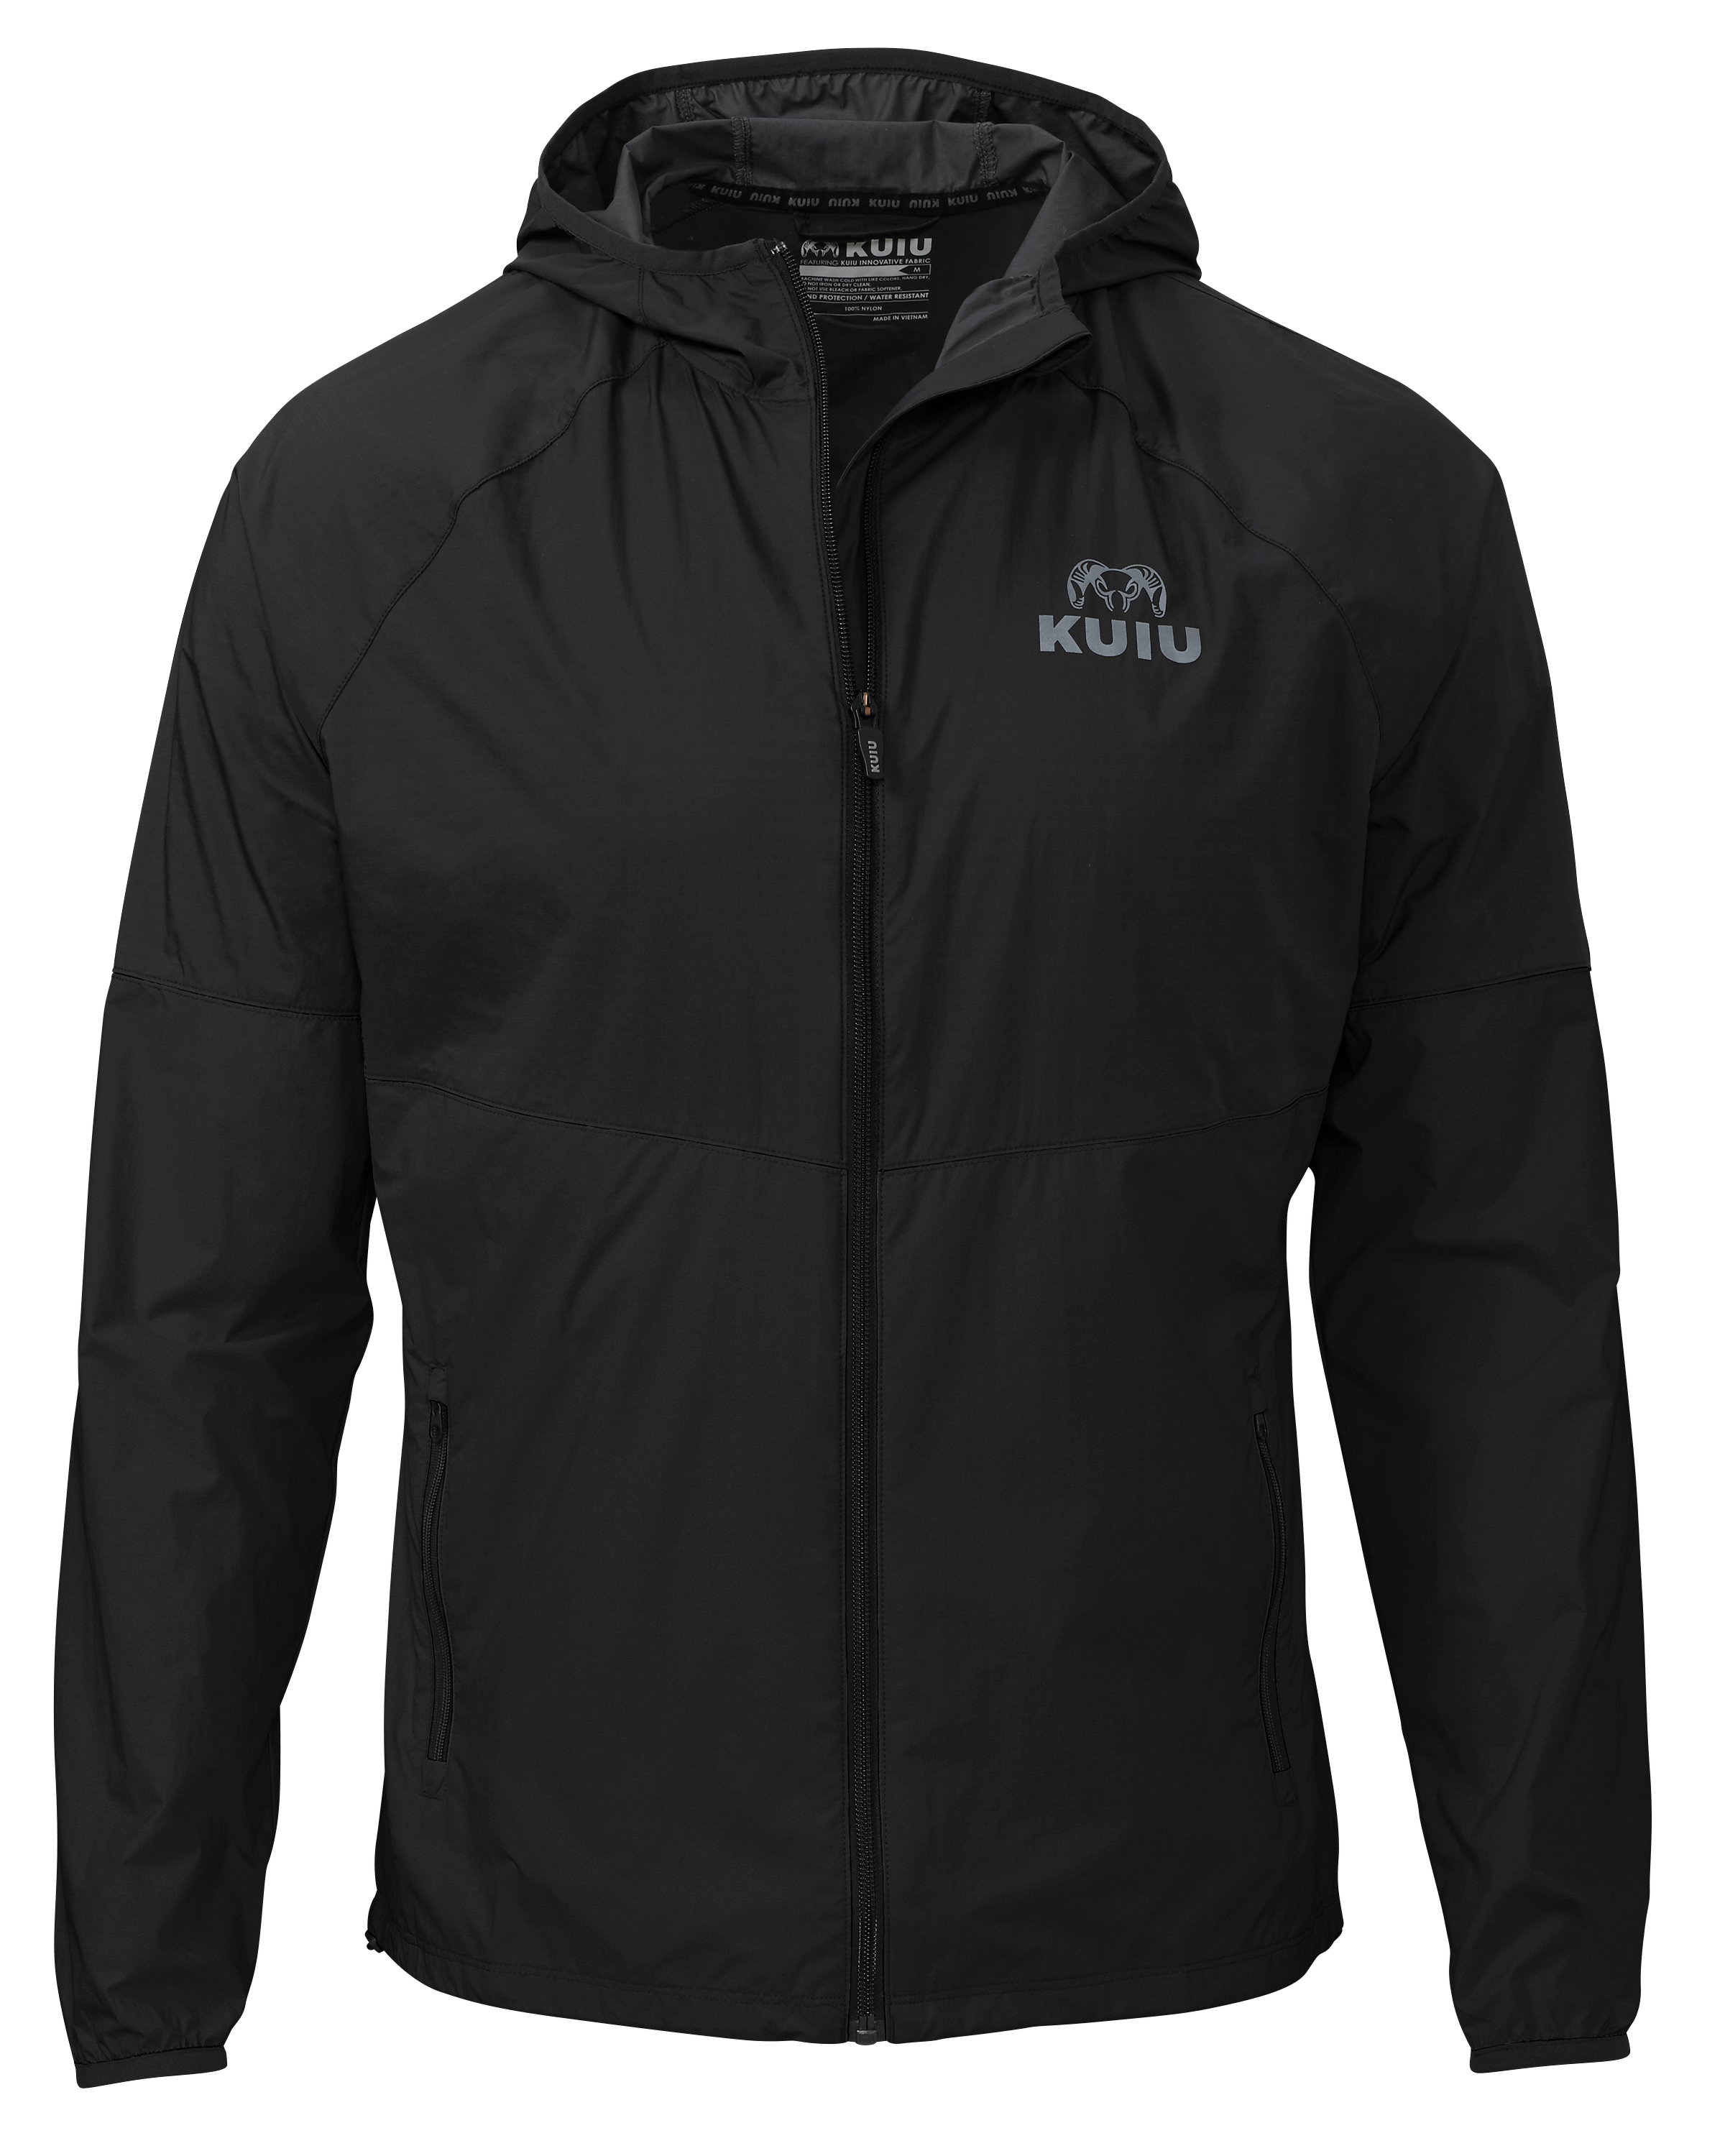 KUIU Training Tech Wind Jacket in Black | Large